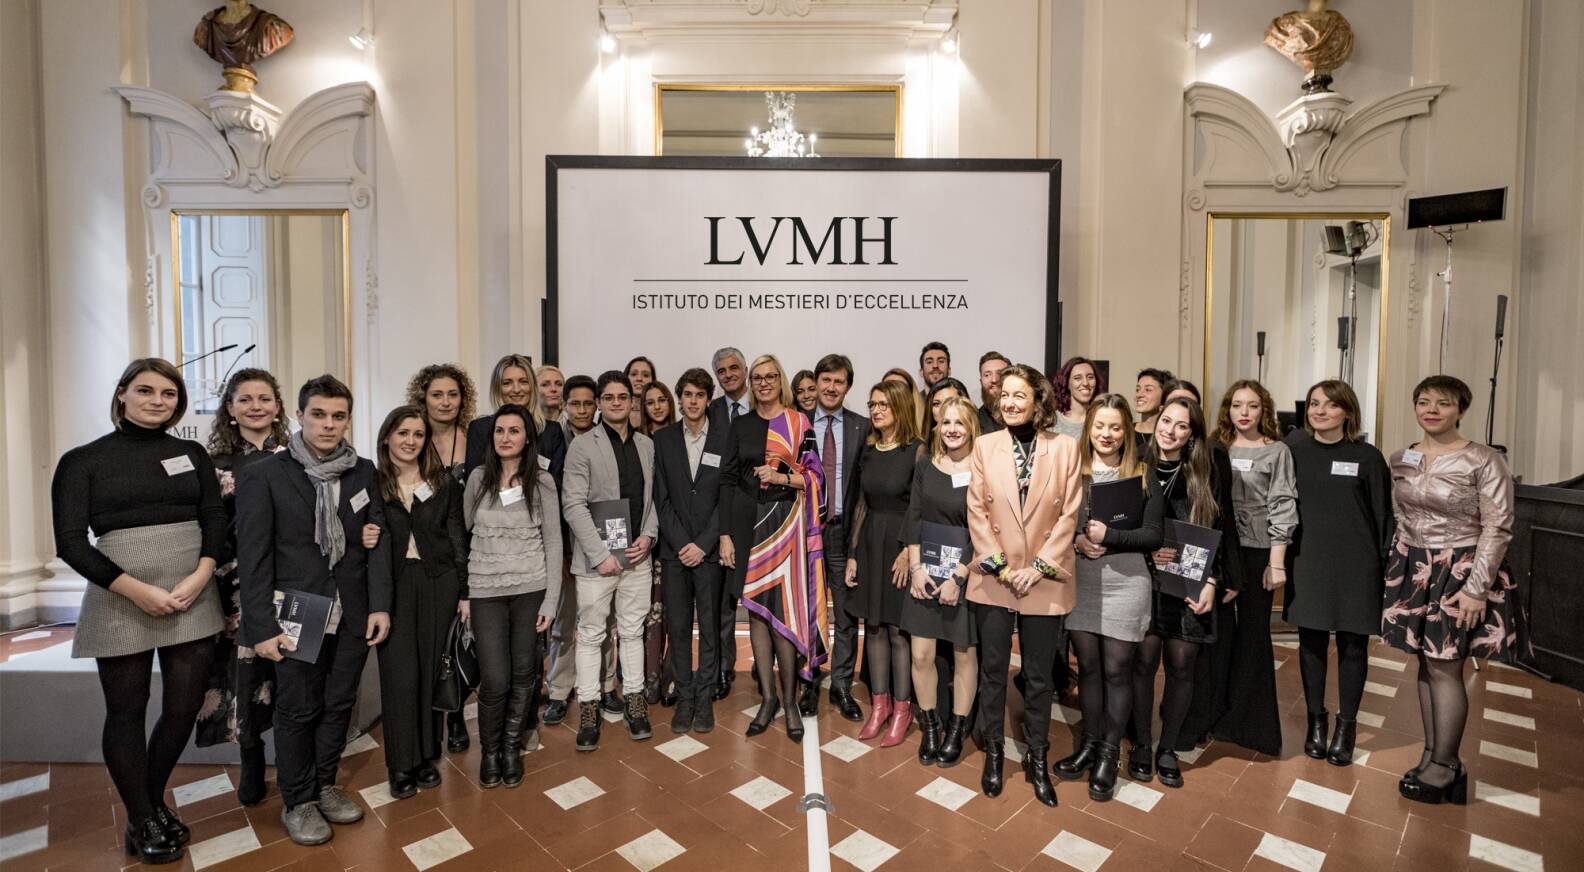 Inside LVMH's success  American Business School of Paris